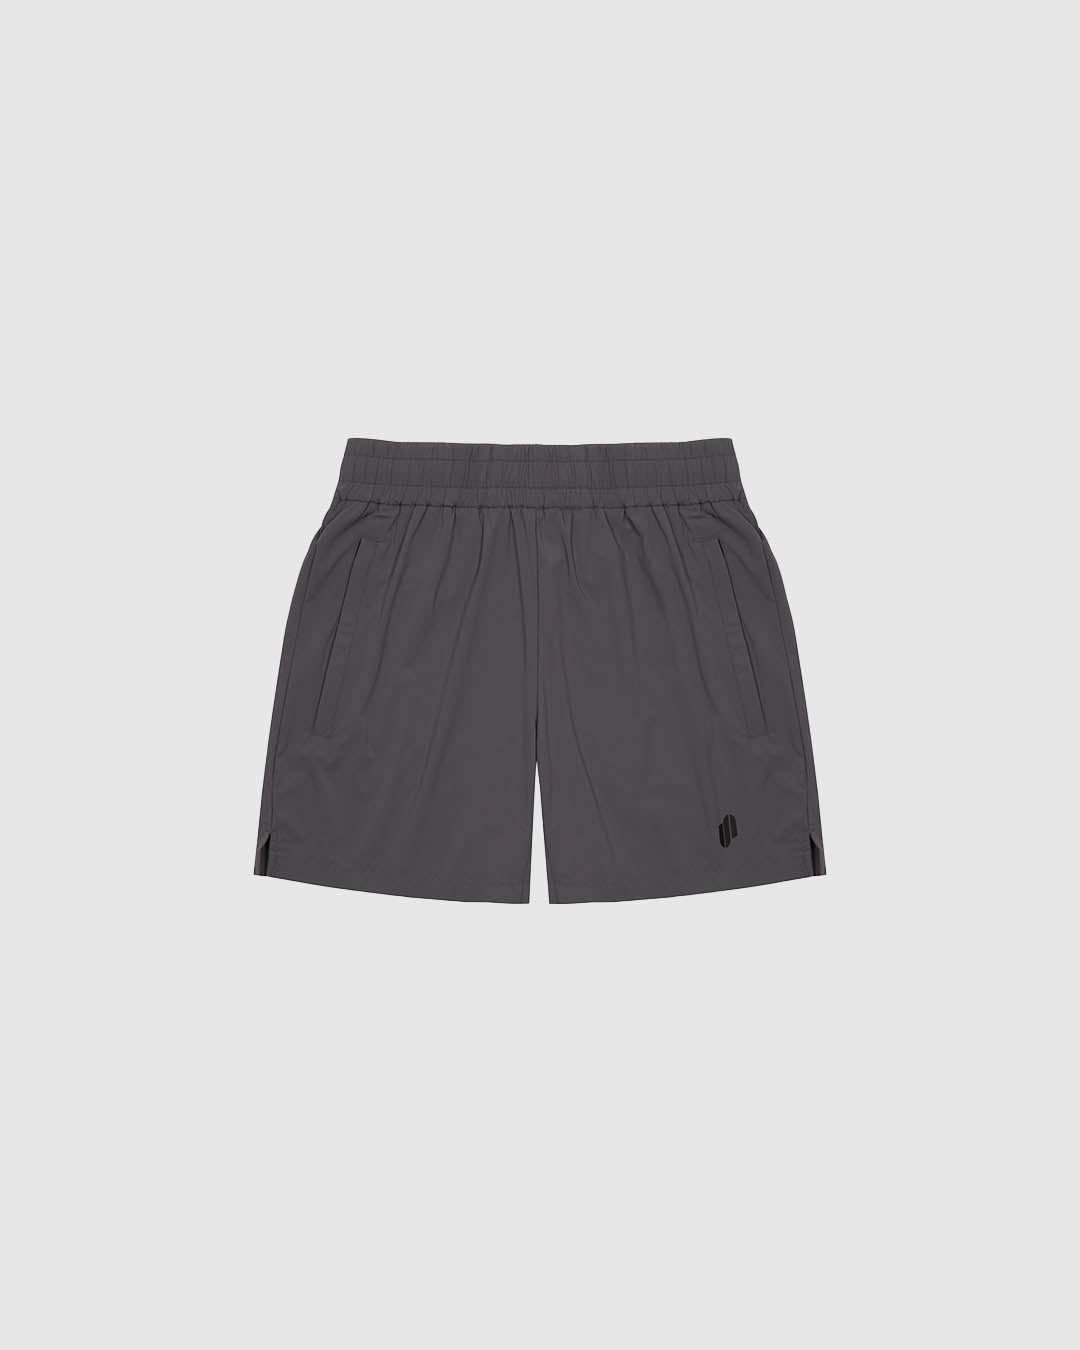 EE:S12 - Nylon Shorts - Charcoal Grey